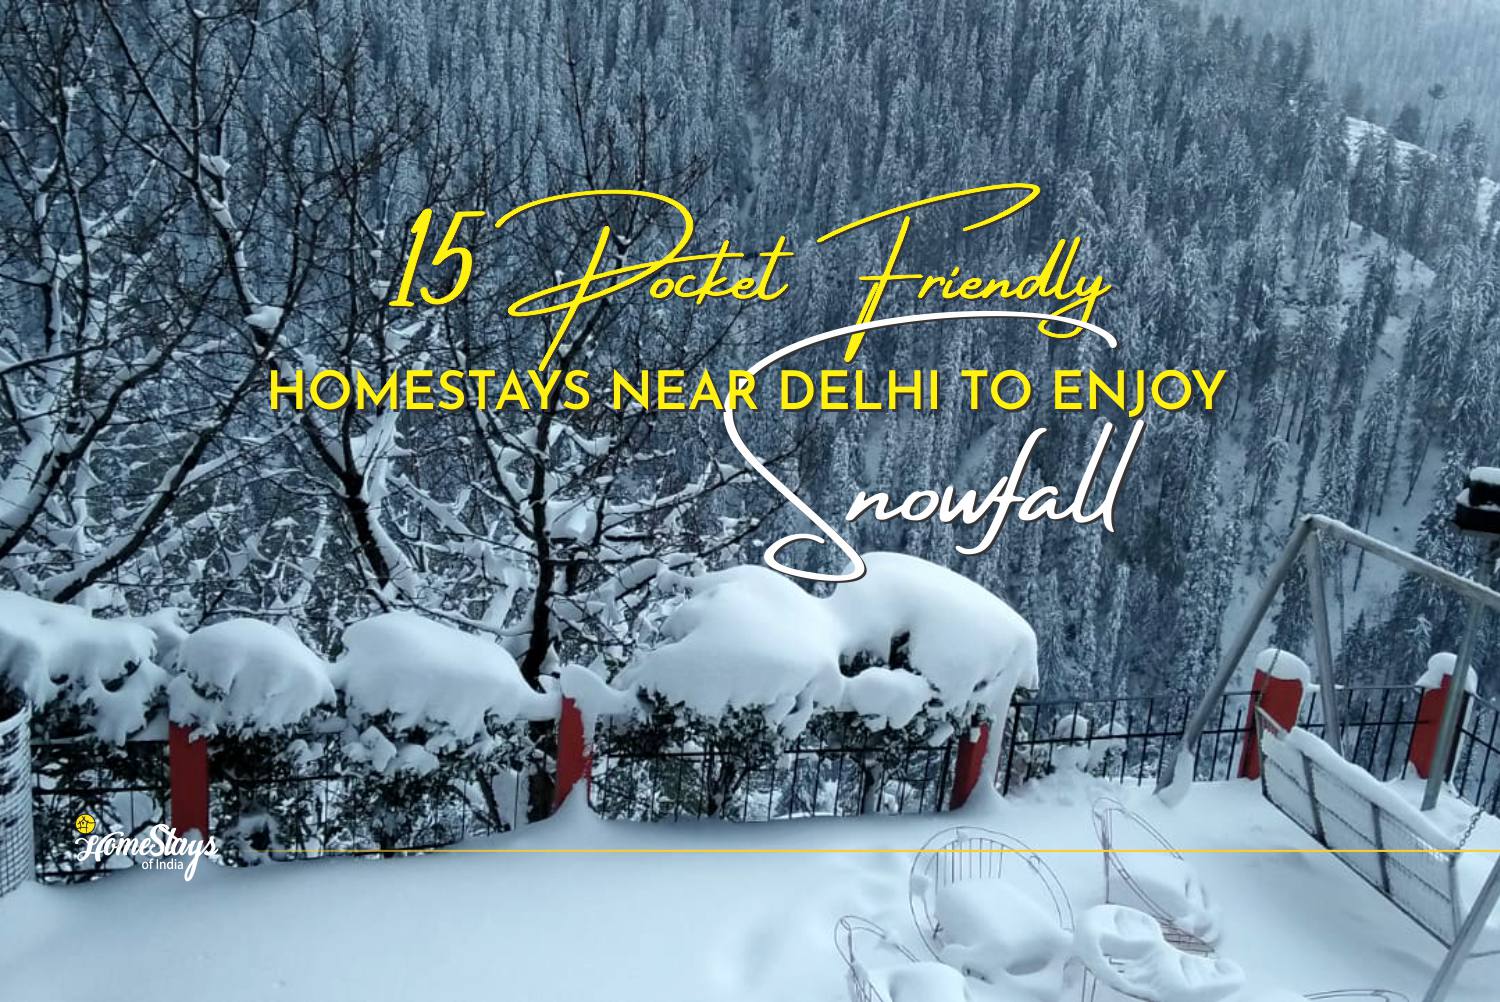 15 Pocket Friendly Homestays Near Delhi to Enjoy Snowfall